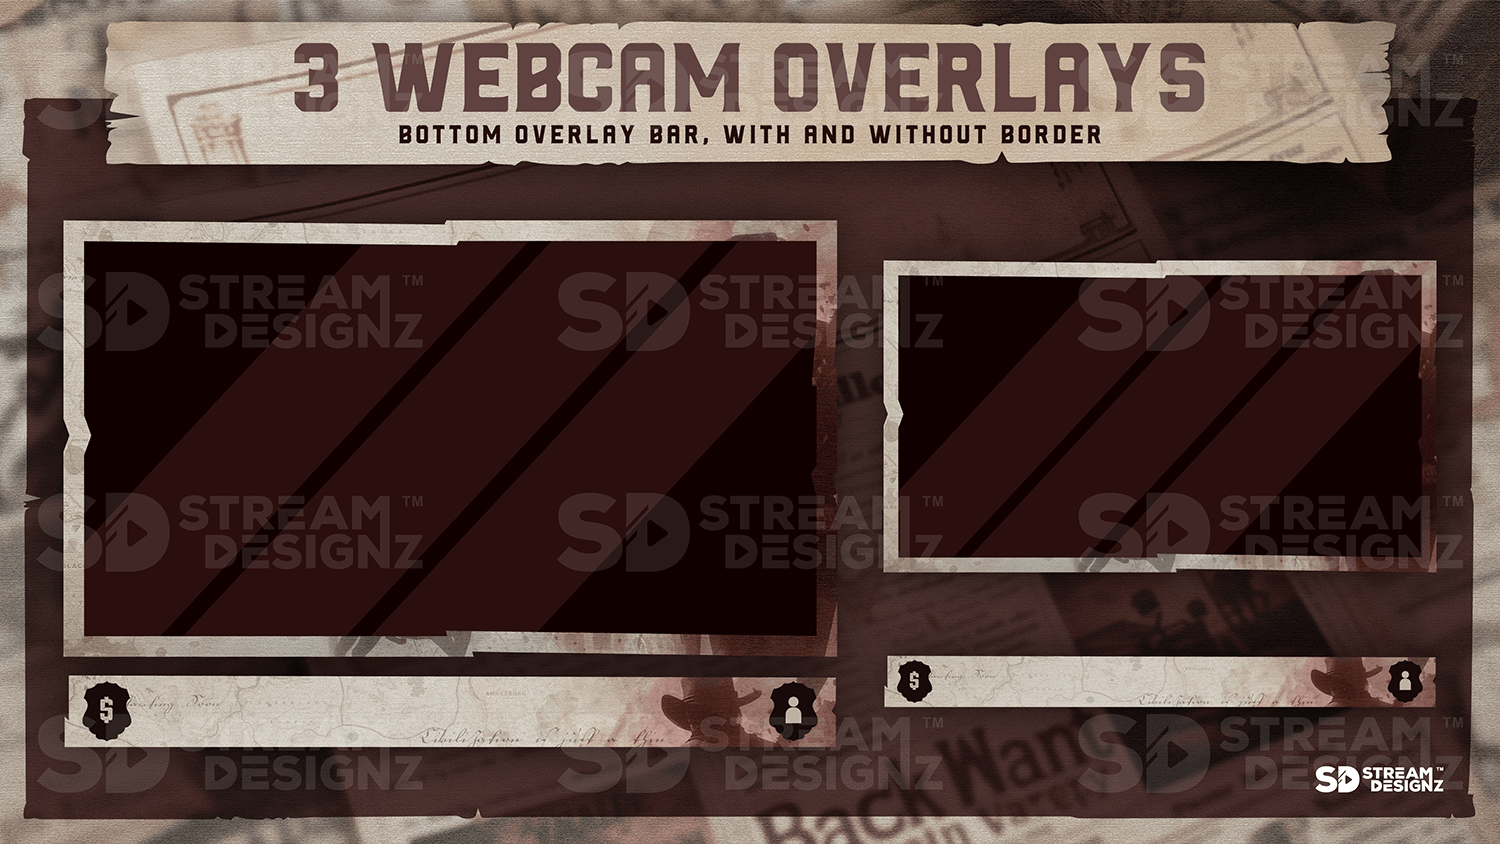 Ultimate stream package 3 webcam overlays outlaw stream designz